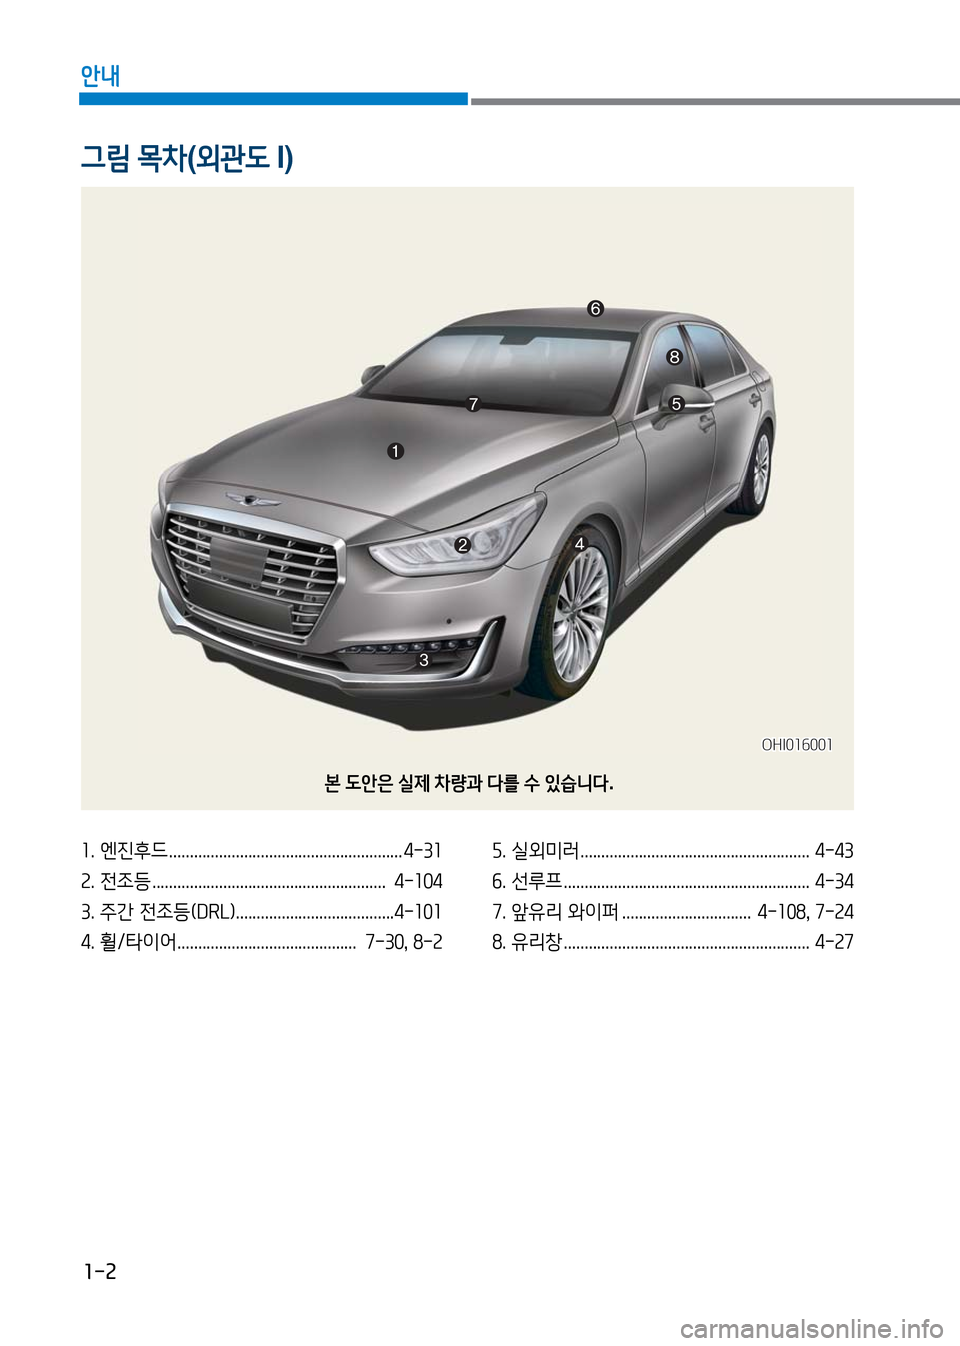 Hyundai Genesis 2016  EQ900 HI - 사용 설명서 (in Korean) 1-2
안내
1. 엔진후드 ........................................................ 4-31 
2. 전조등 ........................................................  4-104
3. 주간 전조등(DRL) ........